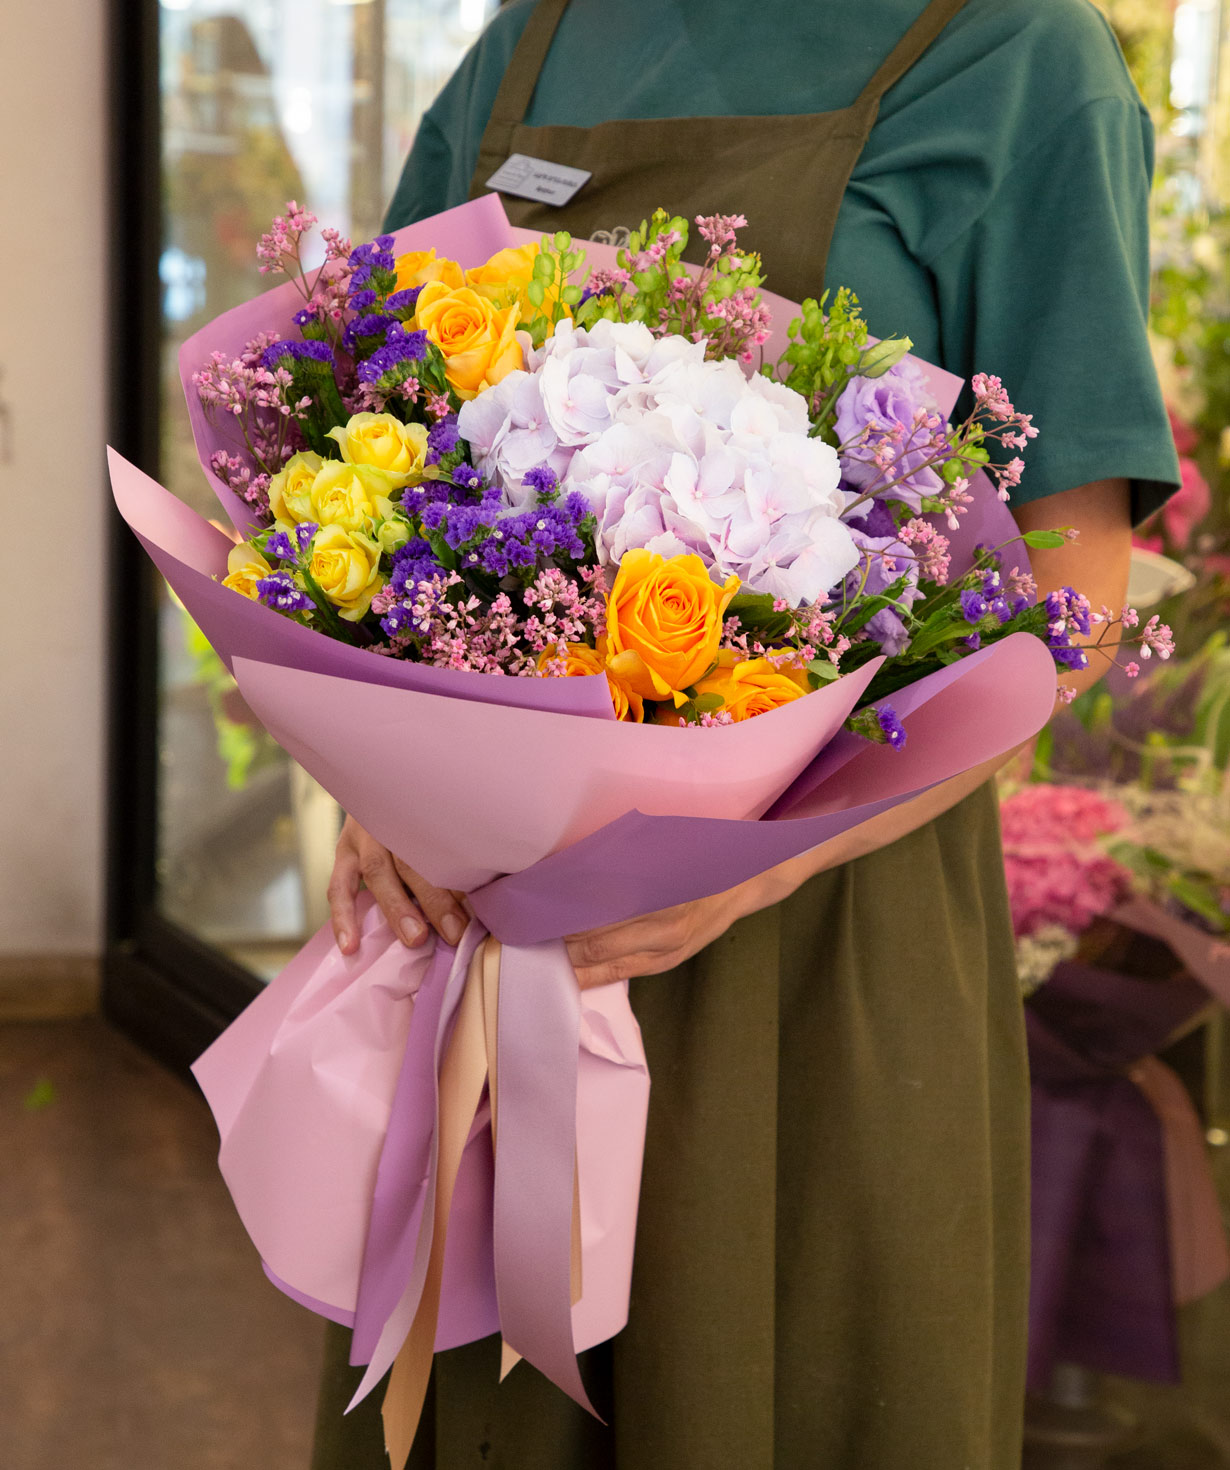 Bouquet ''Kraljevo'' with roses and hortensia